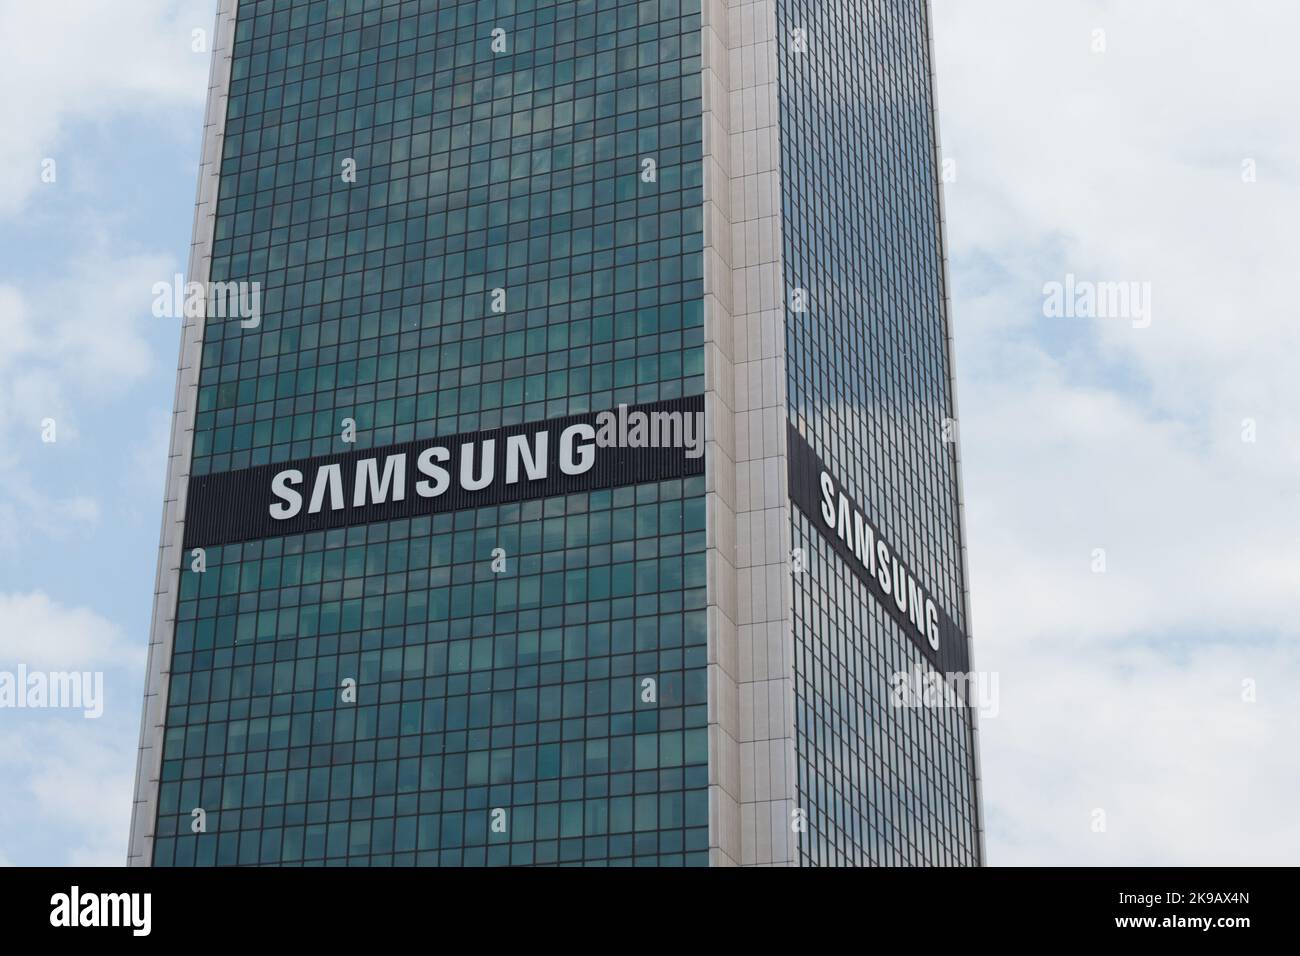 Poland, Warszawa - June 05, 2021: Samsung sign. Samsung's signboard on a high-rise building. Stock Photo